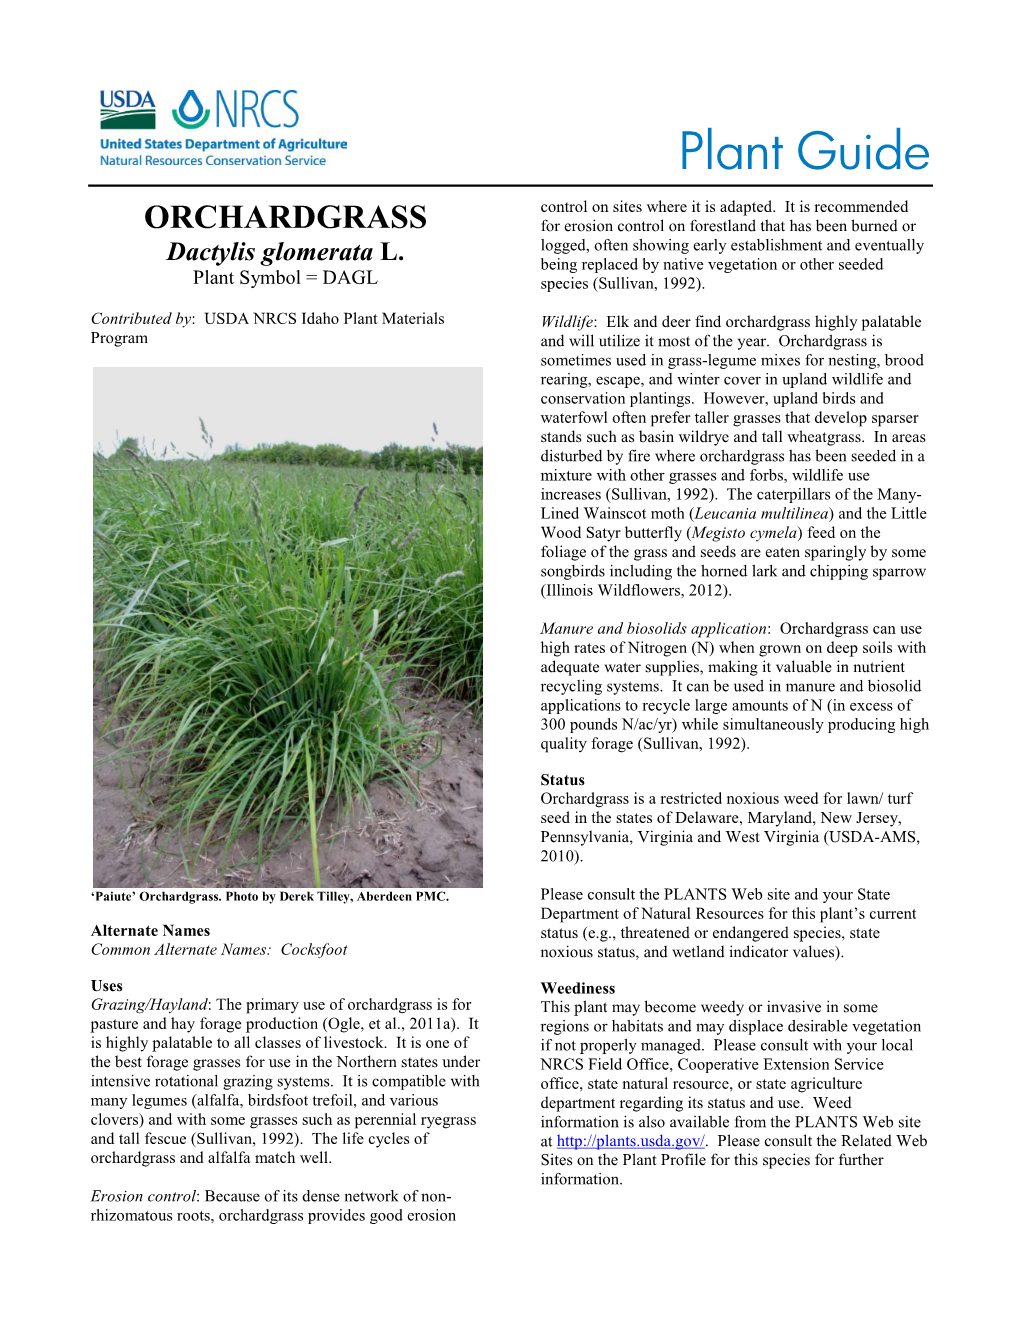 Orchardgrass (Dactylis Glomerata) Plant Guide